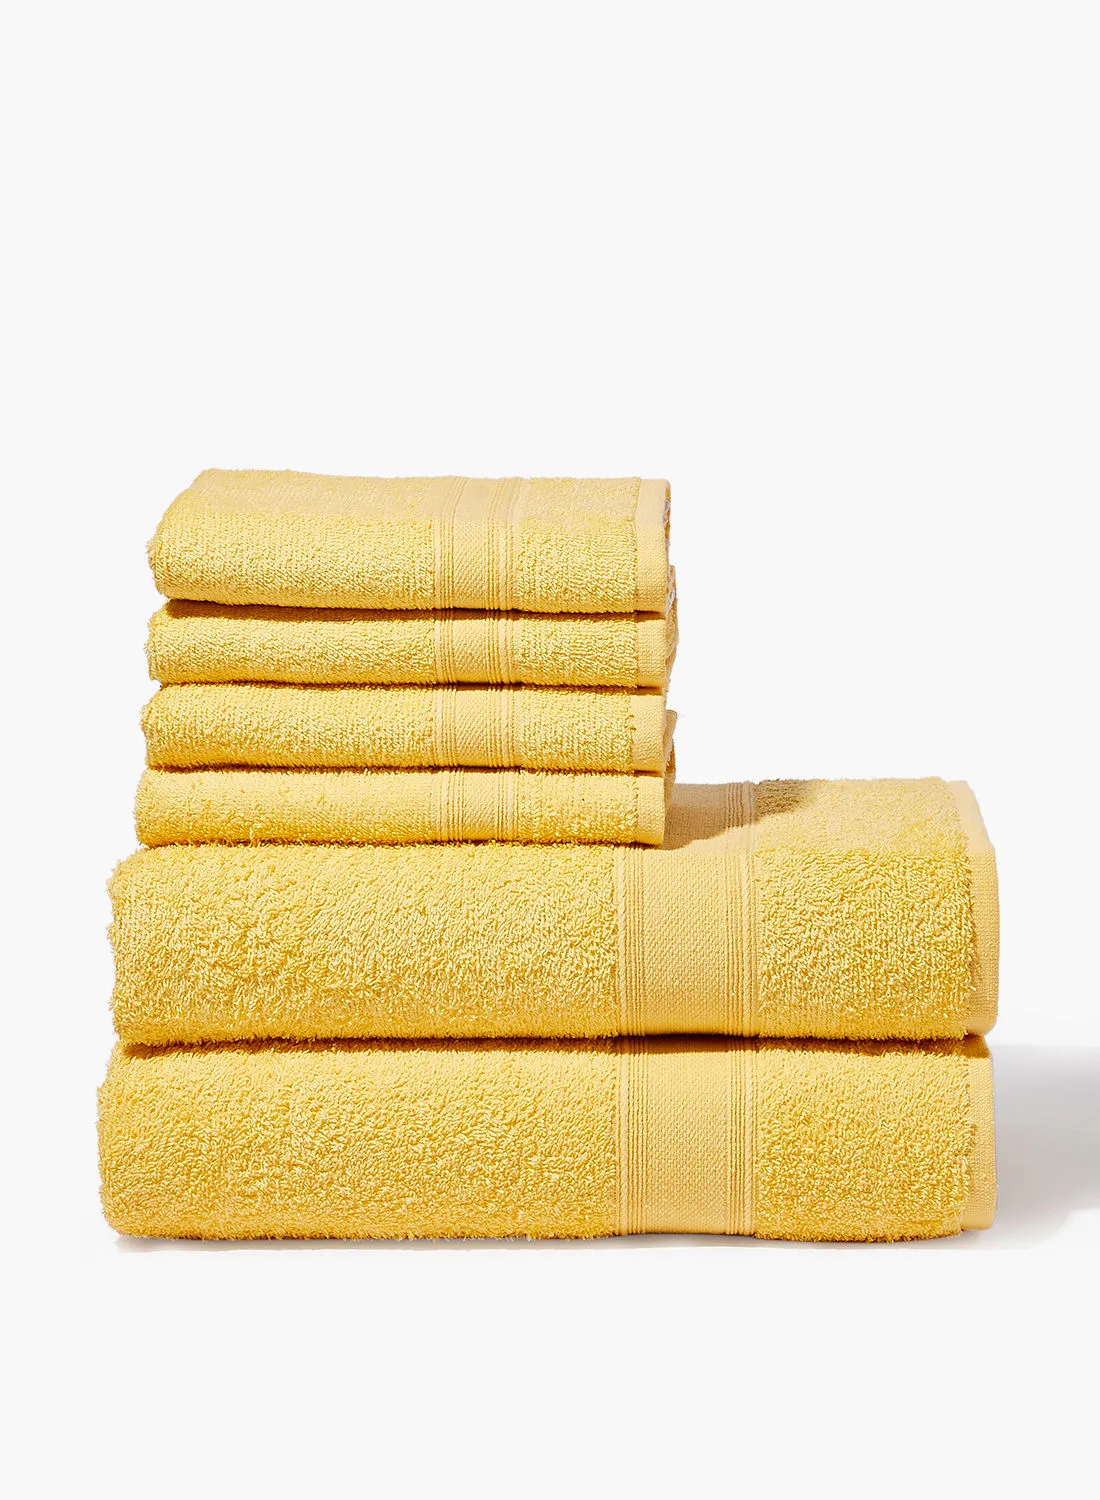 Amal 6 Piece Bathroom Towel Set - 400 GSM 100% Cotton Terry - 4 Hand Towel - 2 Bath Towel - Yellow Color -Quick Dry - Super Absorbent